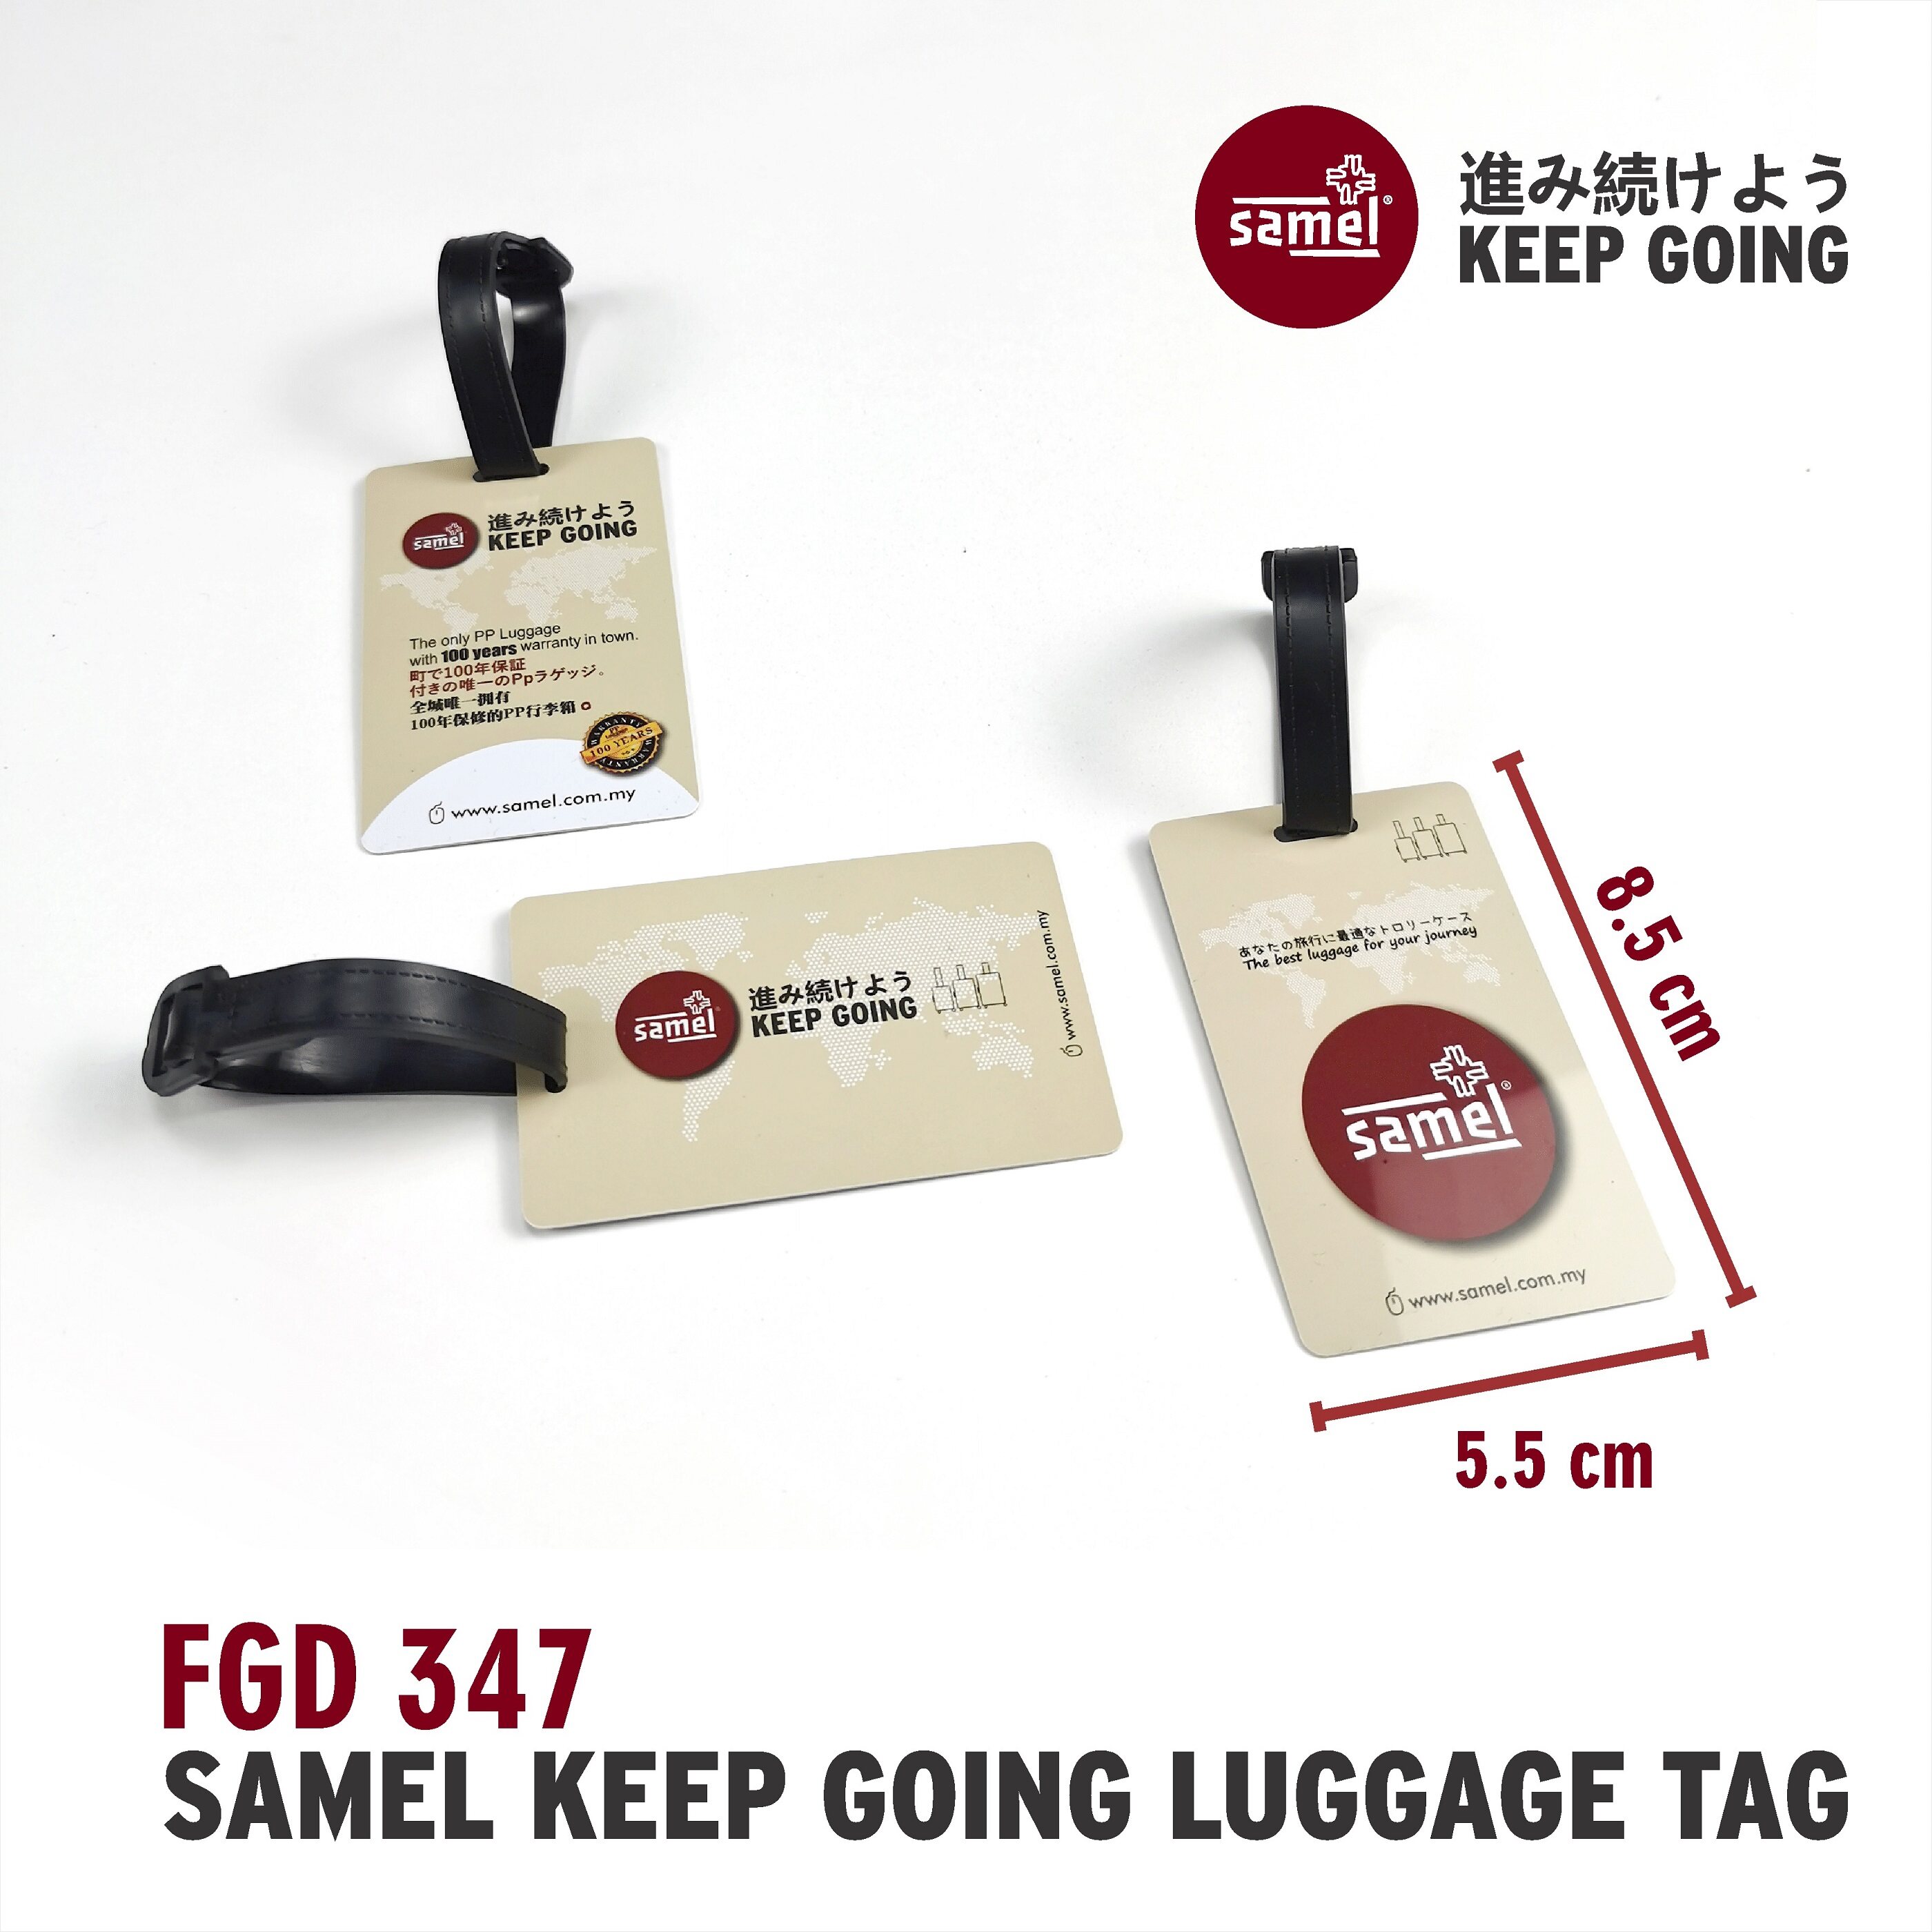 FGD 347 SAMEL KEEP GOING LUGGAGE TAG